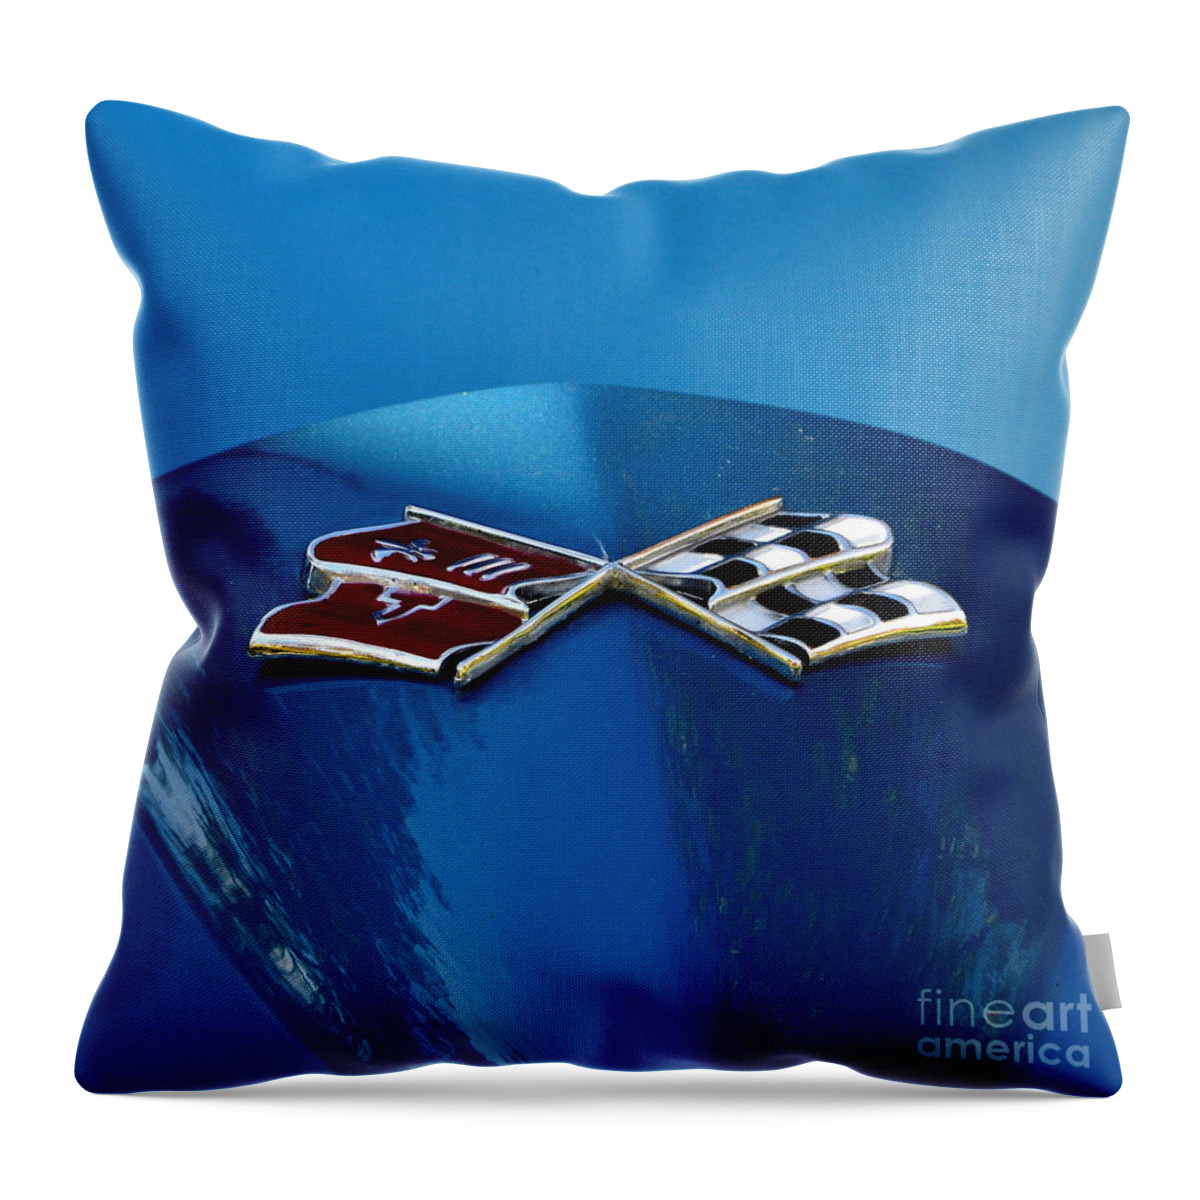  Throw Pillow featuring the photograph Blue Corvette by Dean Ferreira